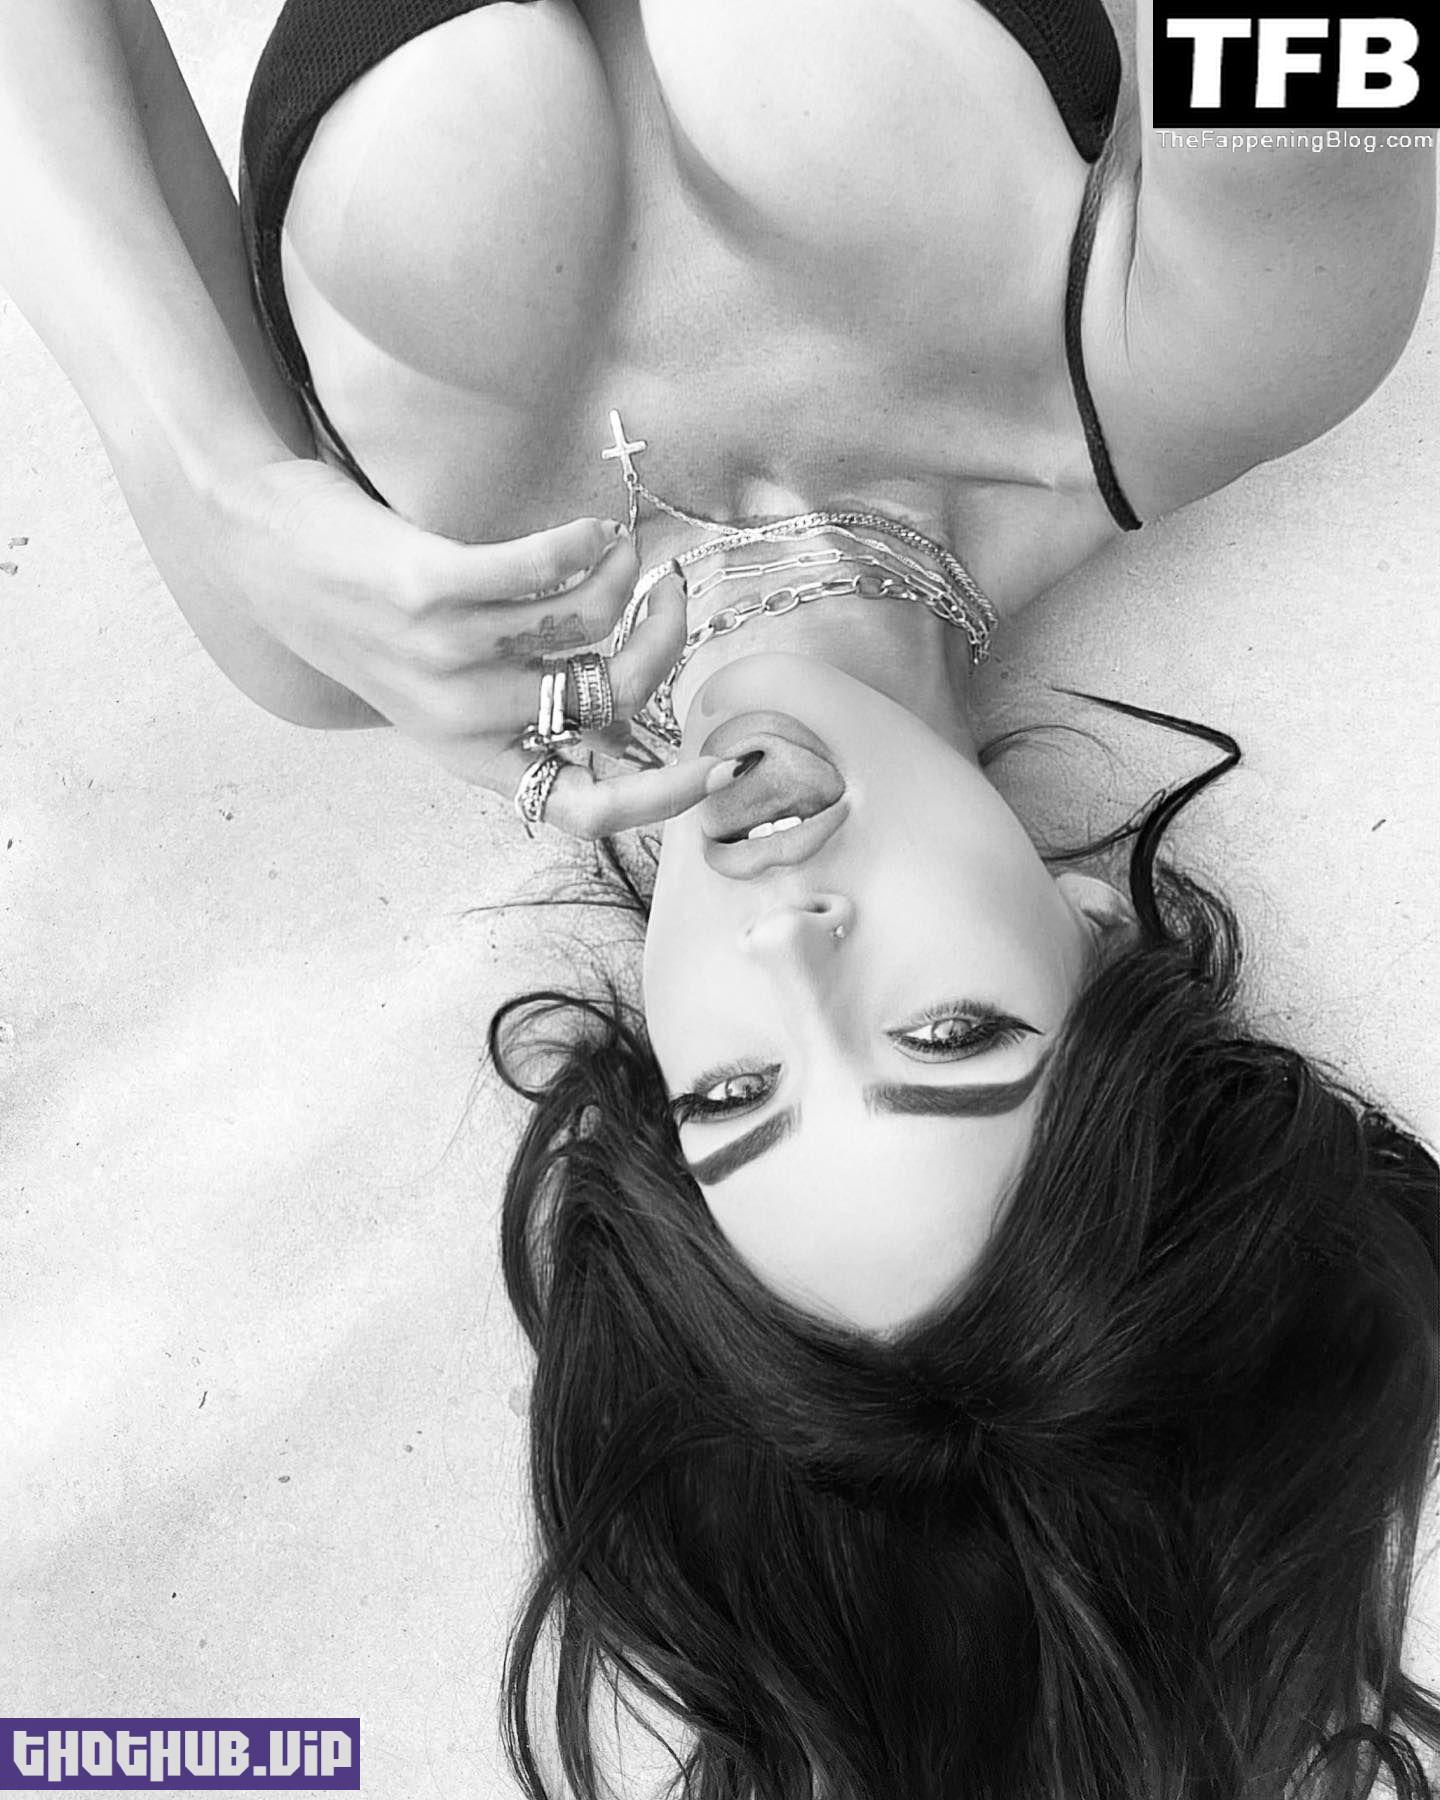 Megan Fox Sexy The Fappening Blog 4 1